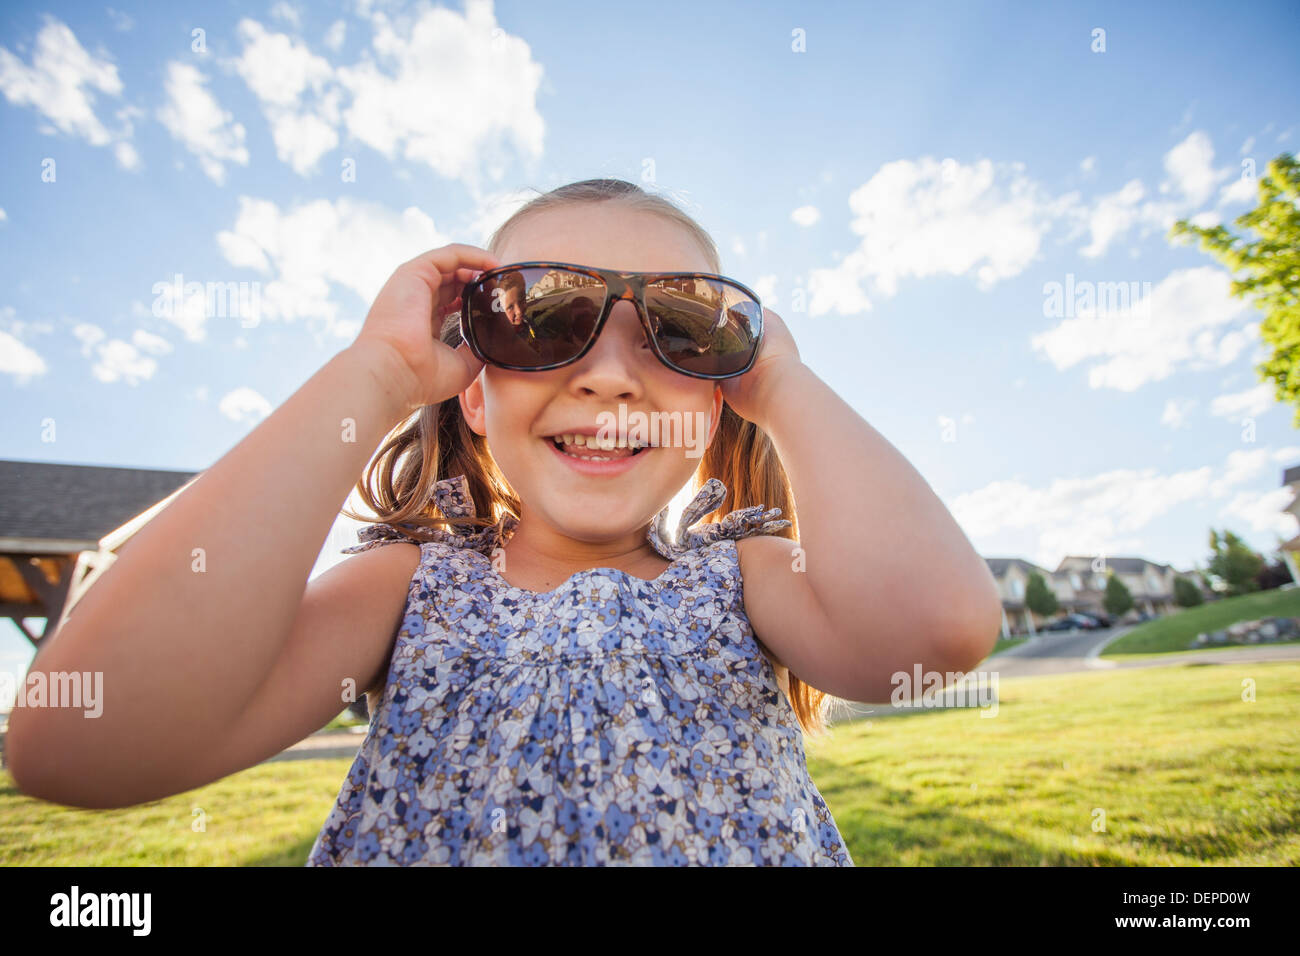 Caucasian girl wearing sunglasses outdoors Stock Photo